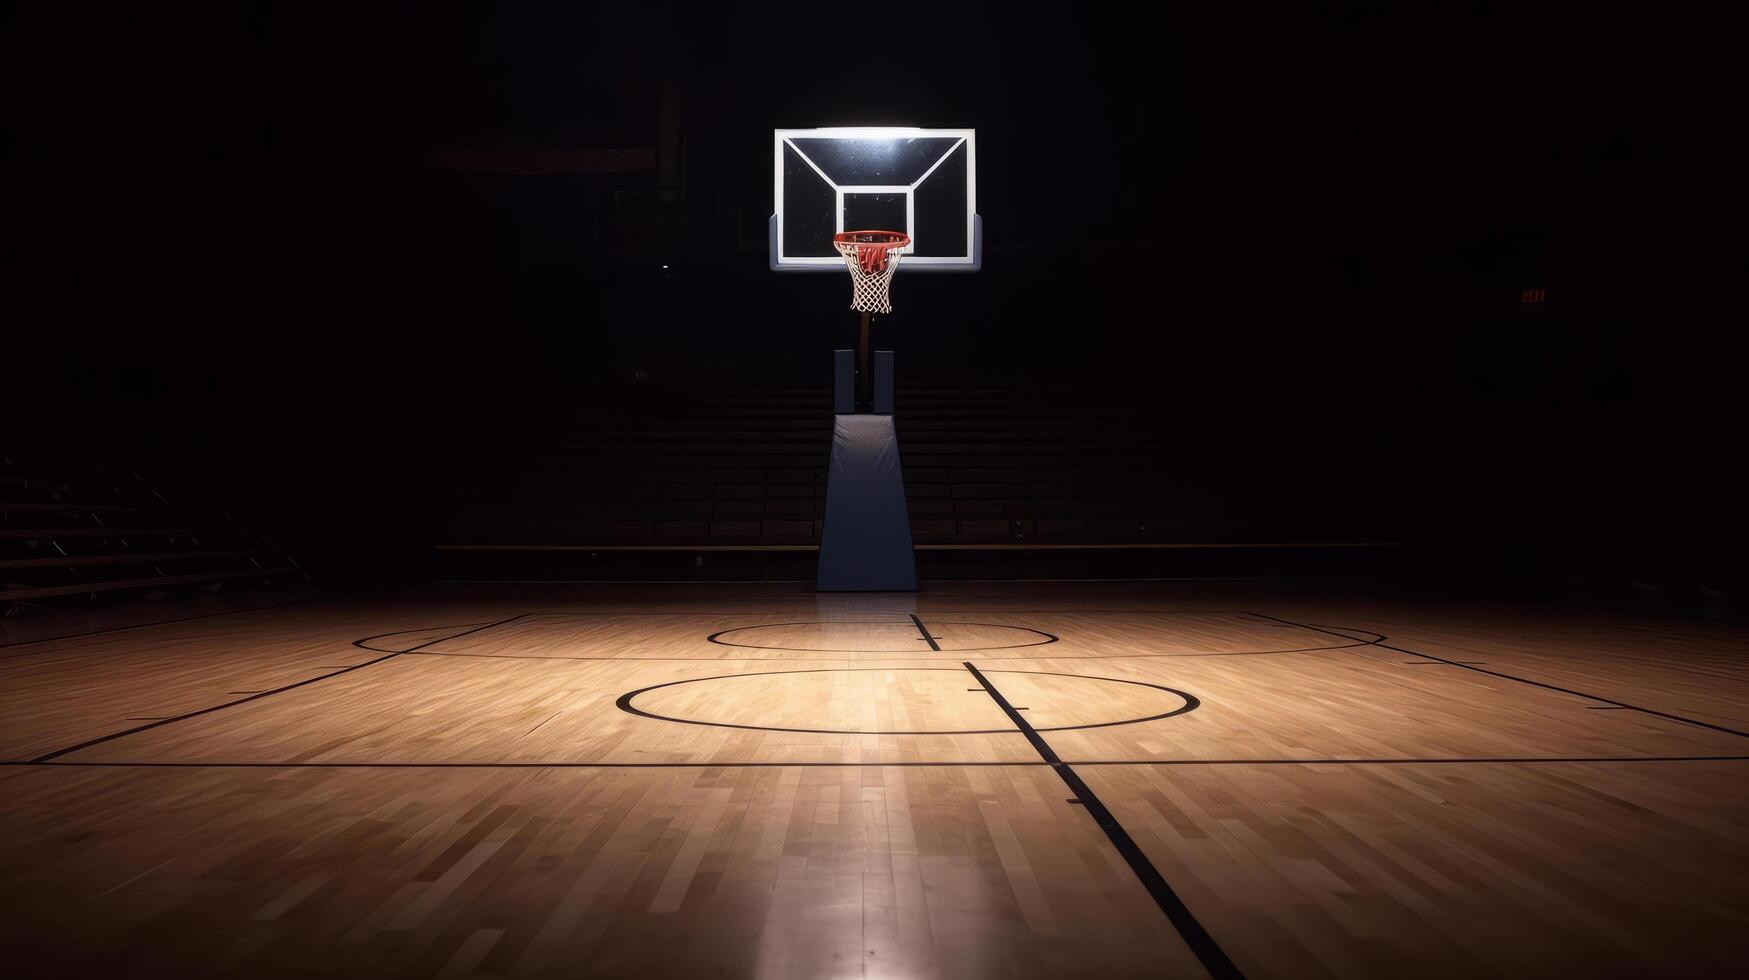 Empty Outdoor Blacktop Basketball Court High-Res Stock Photo